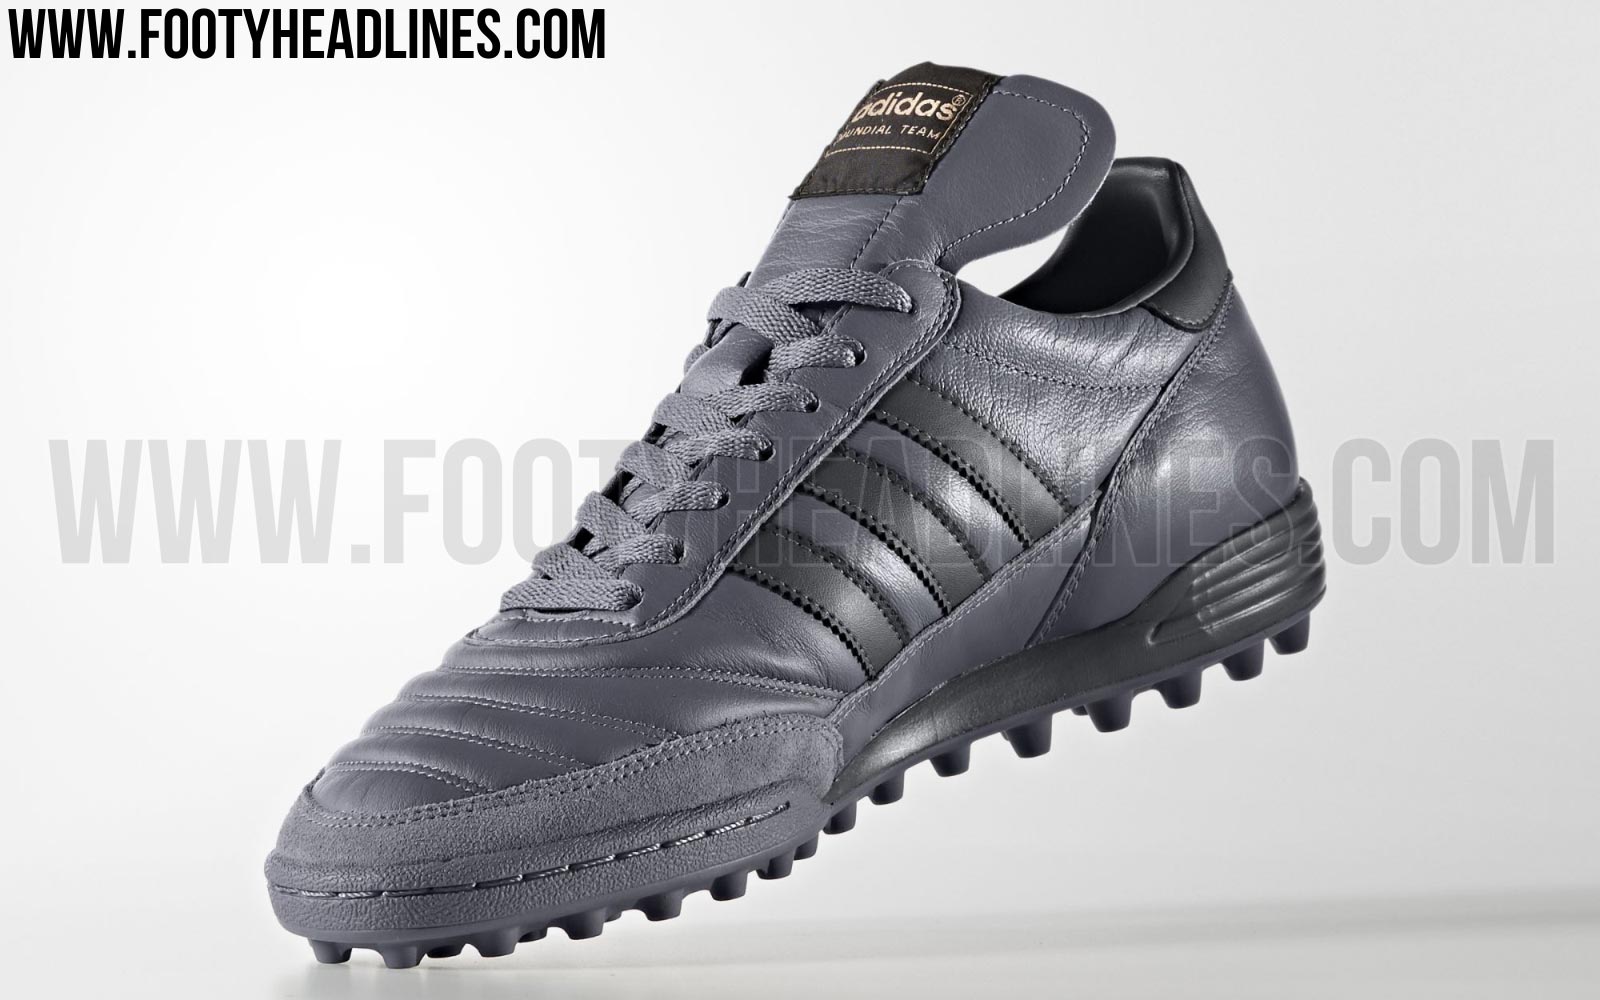 Grey Adidas Mundial Boots - Footy Headlines